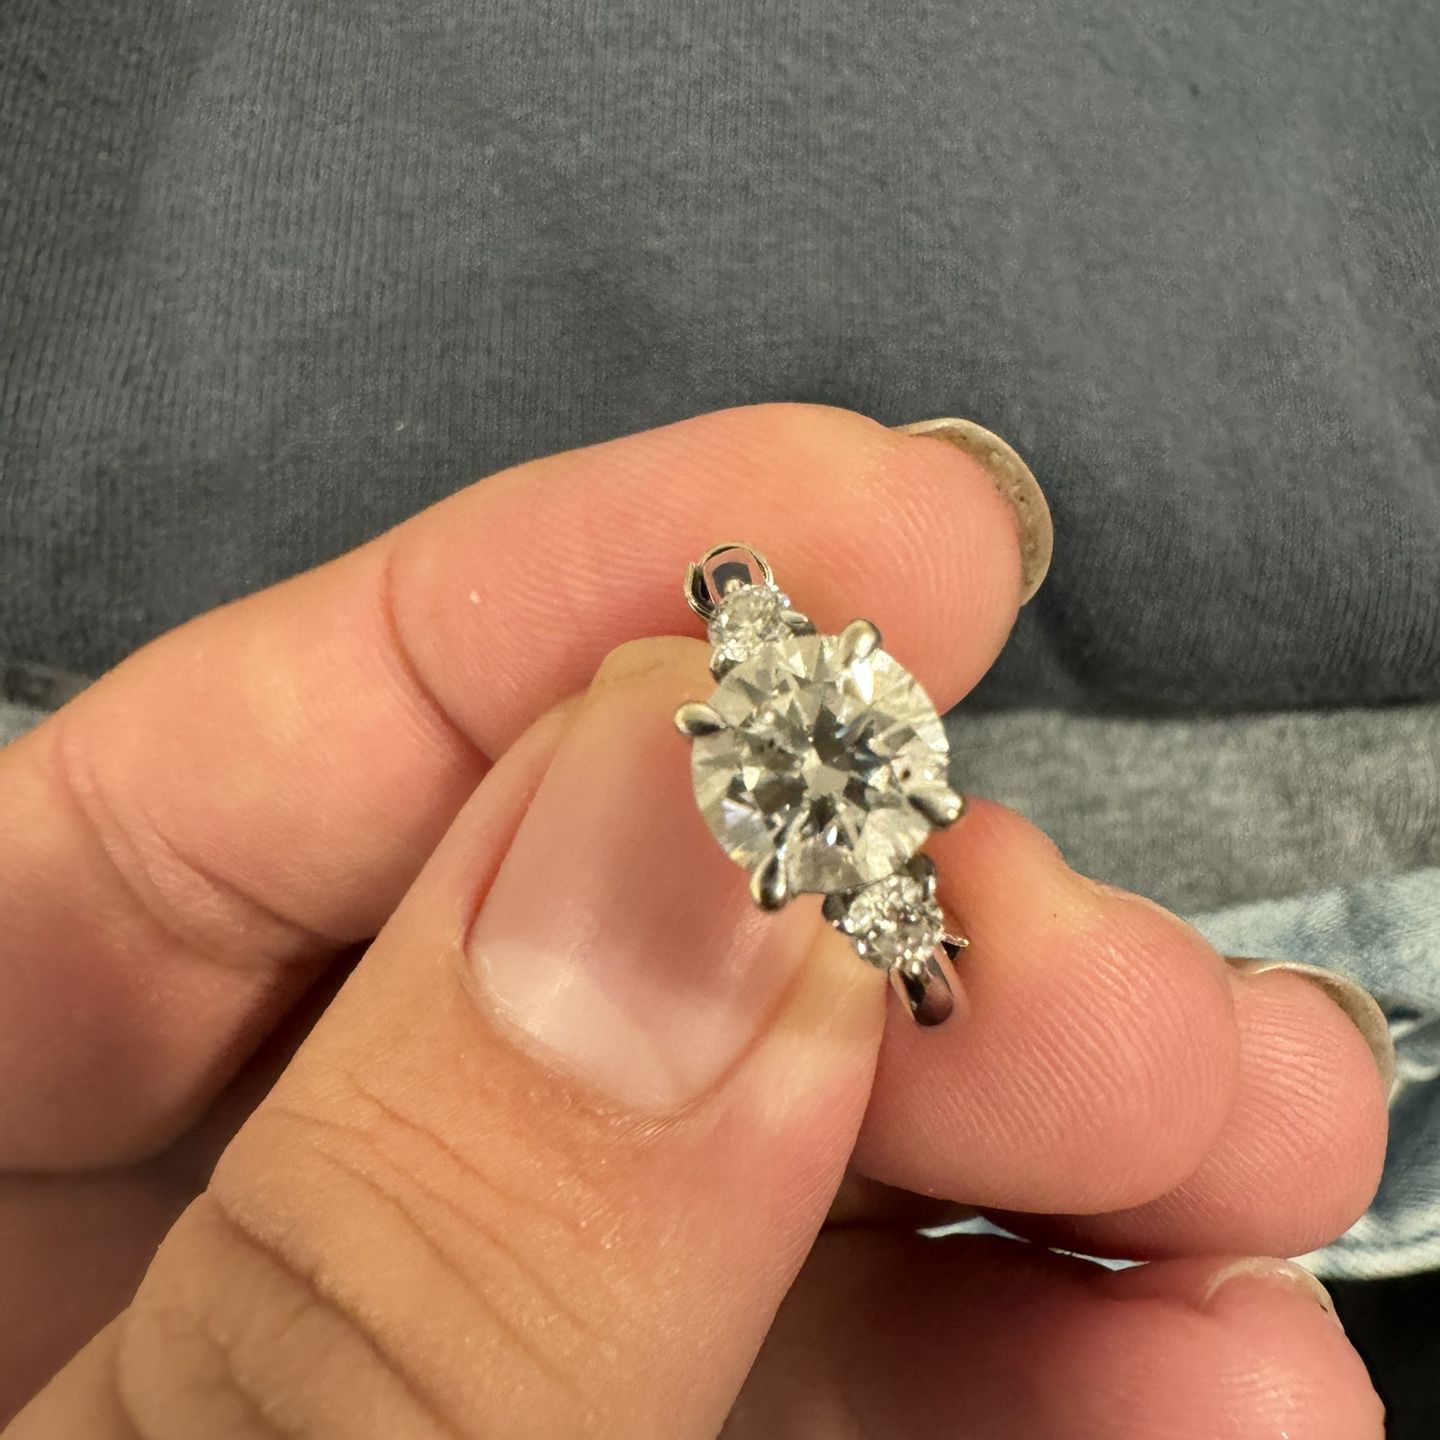 Size 6, 1.75 Carat , E color Lab Grown Diamond Ring